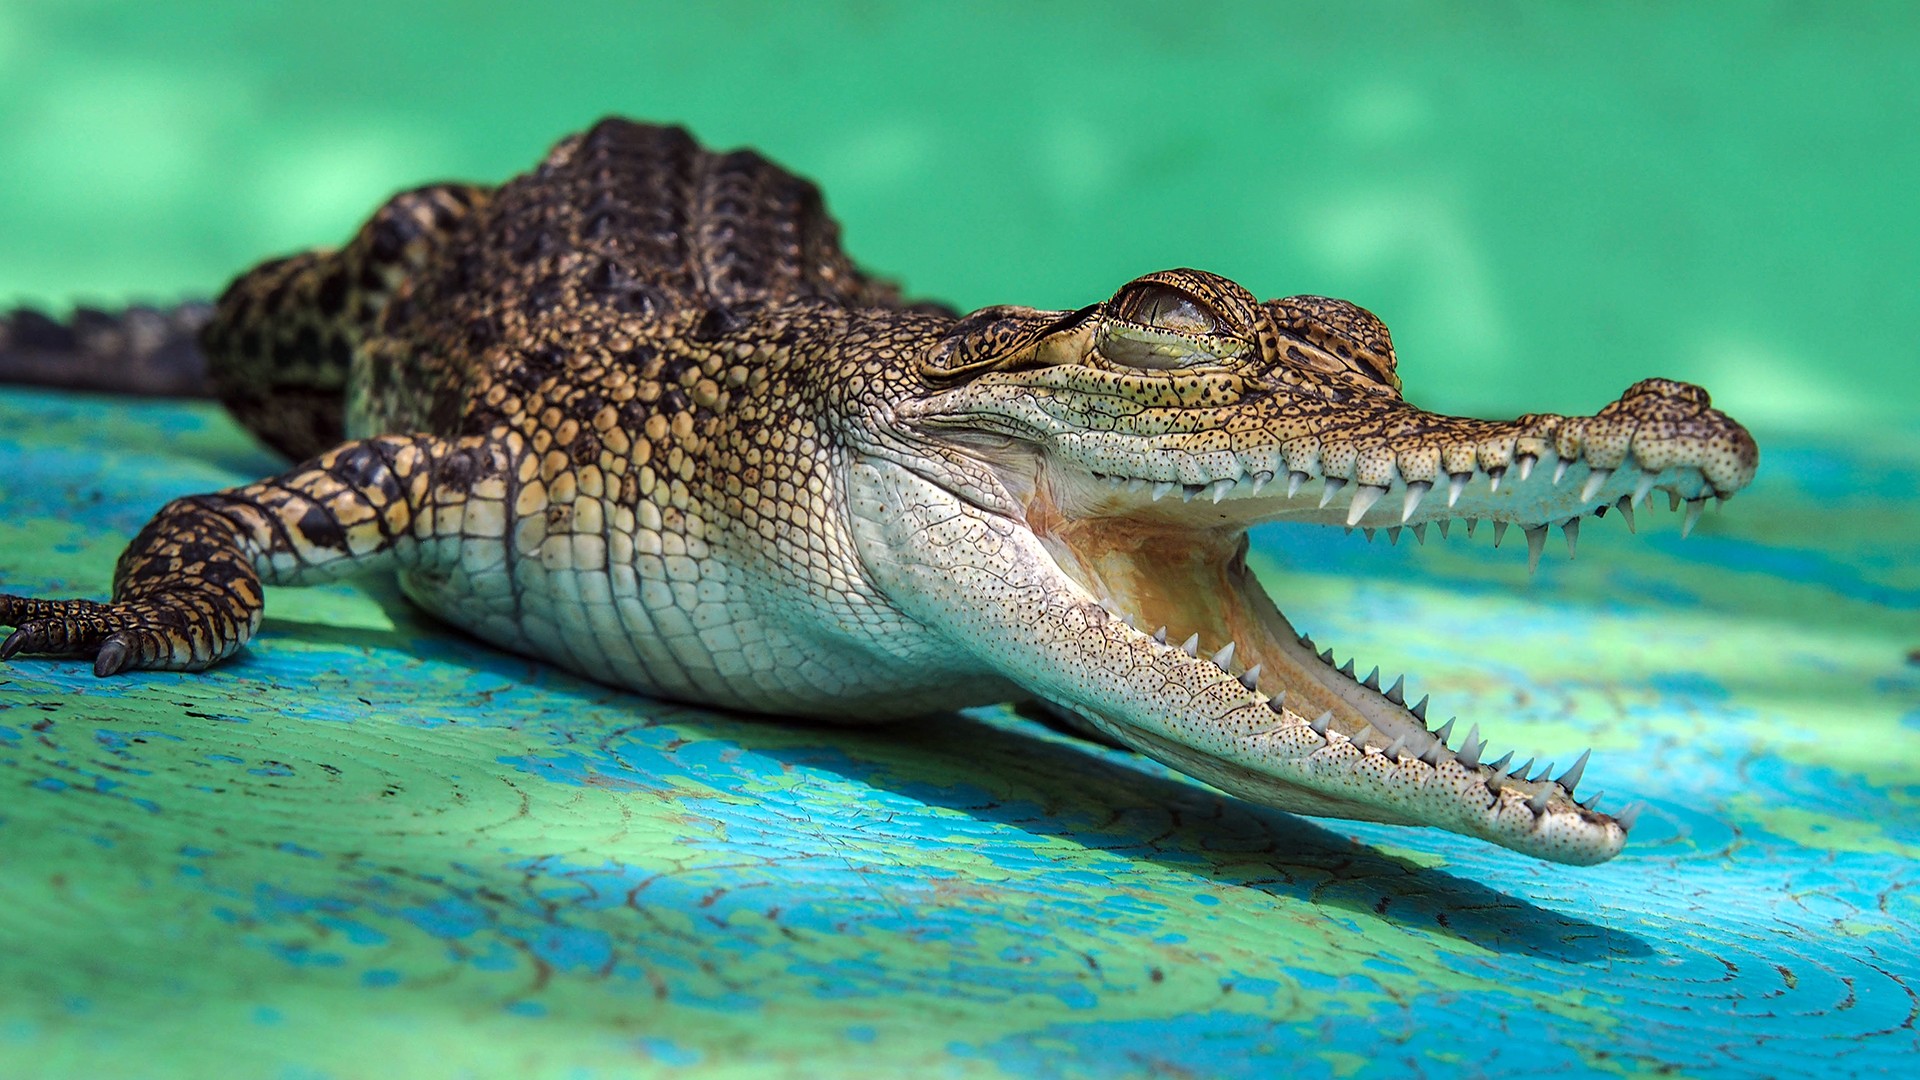 General 1920x1080 animals reptiles teeth green alligators crocodiles